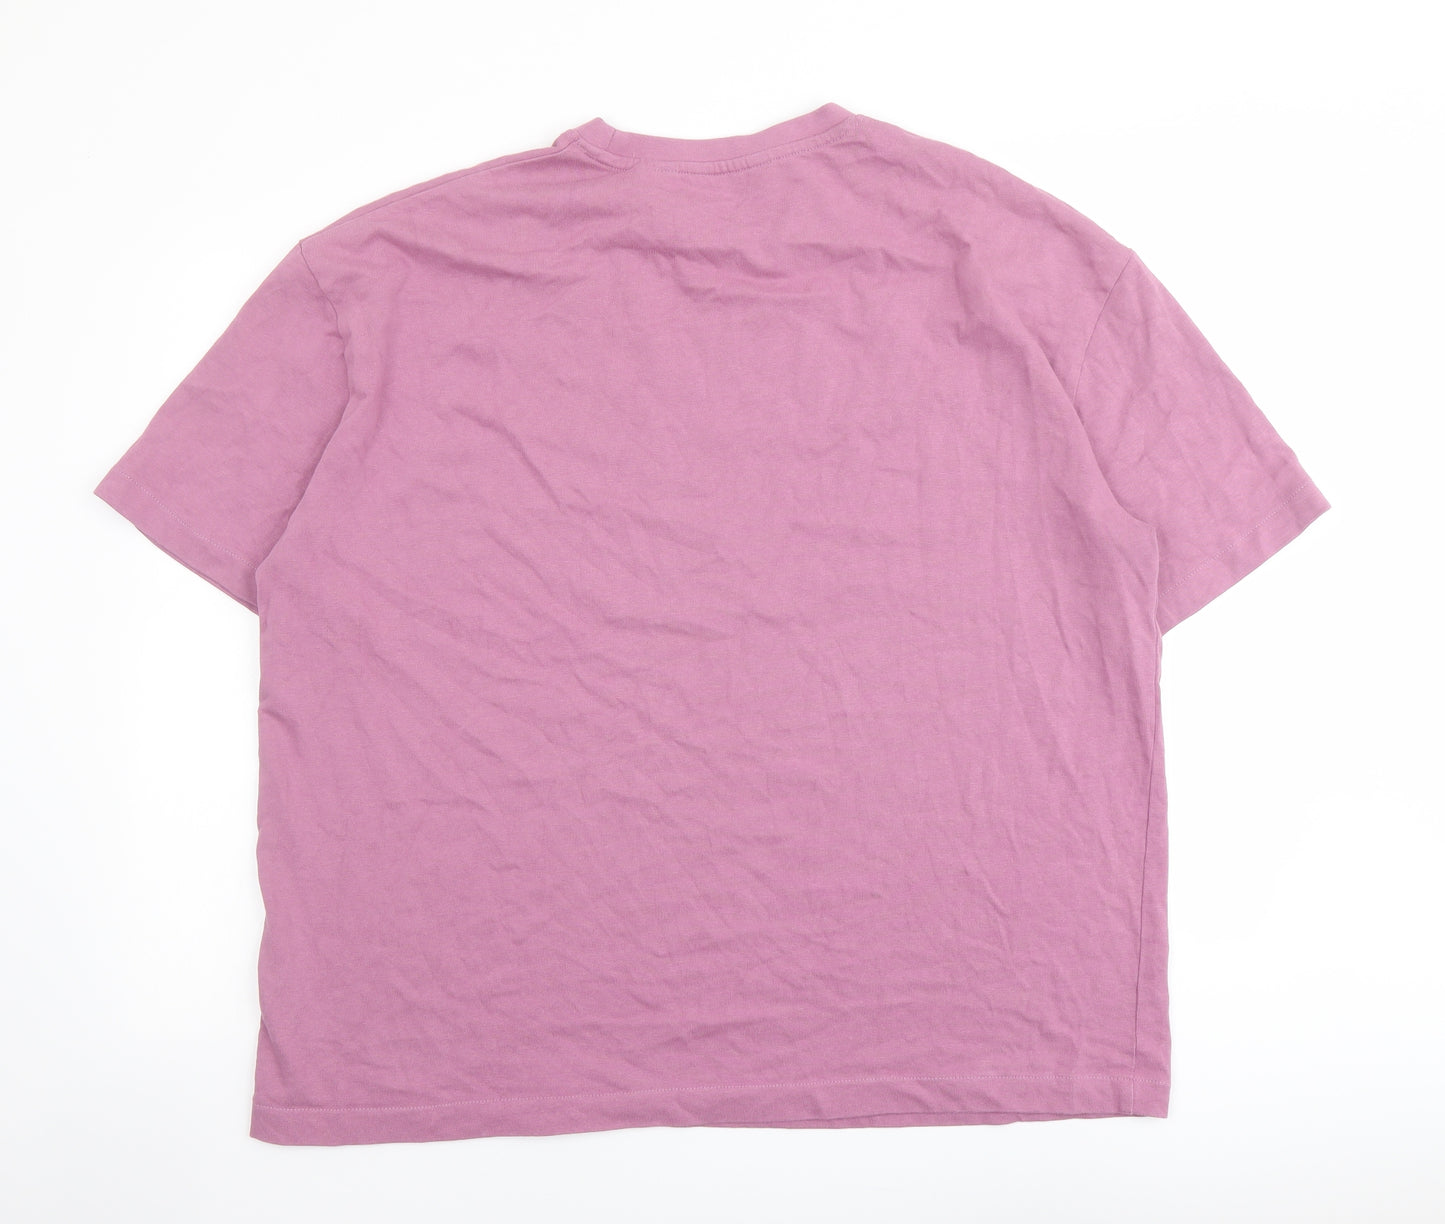 NEXT Mens Purple Cotton T-Shirt Size XL Round Neck